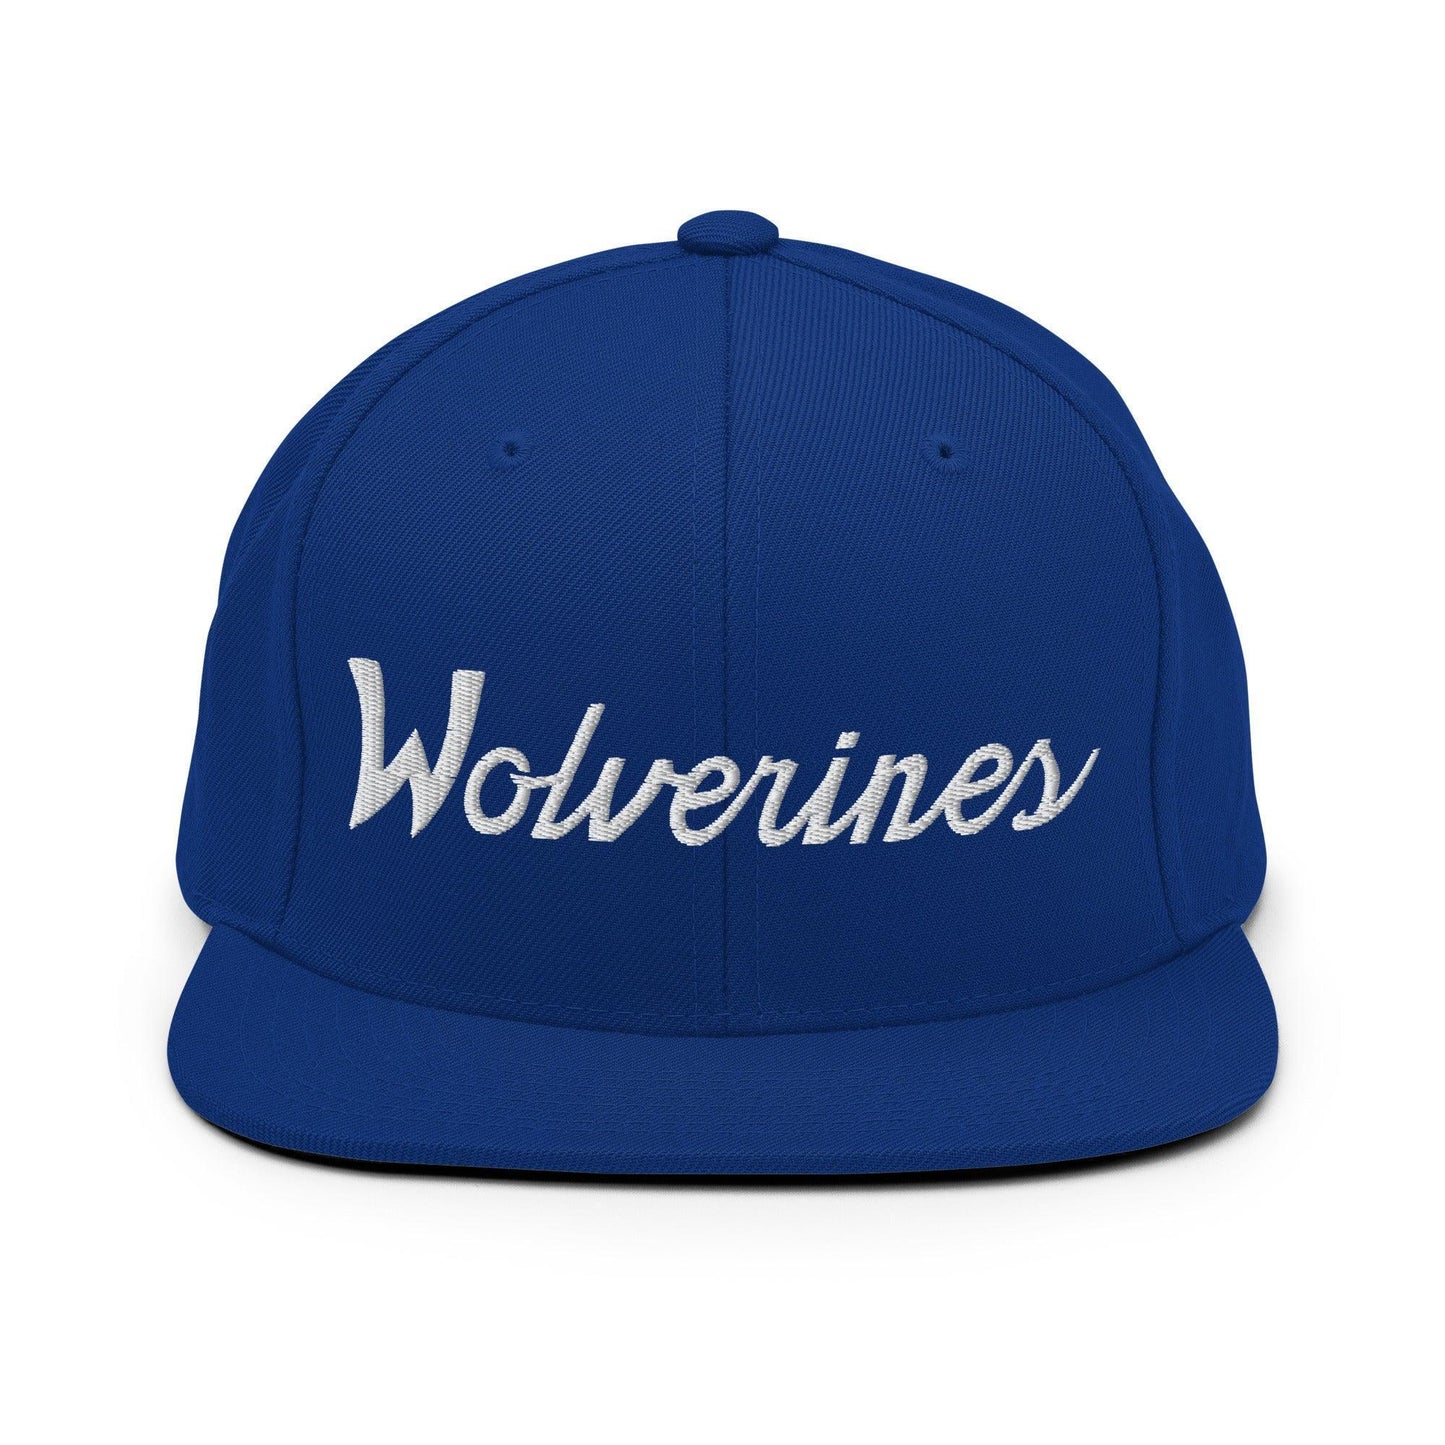 Wolverines School Mascot Script Snapback Hat Royal Blue